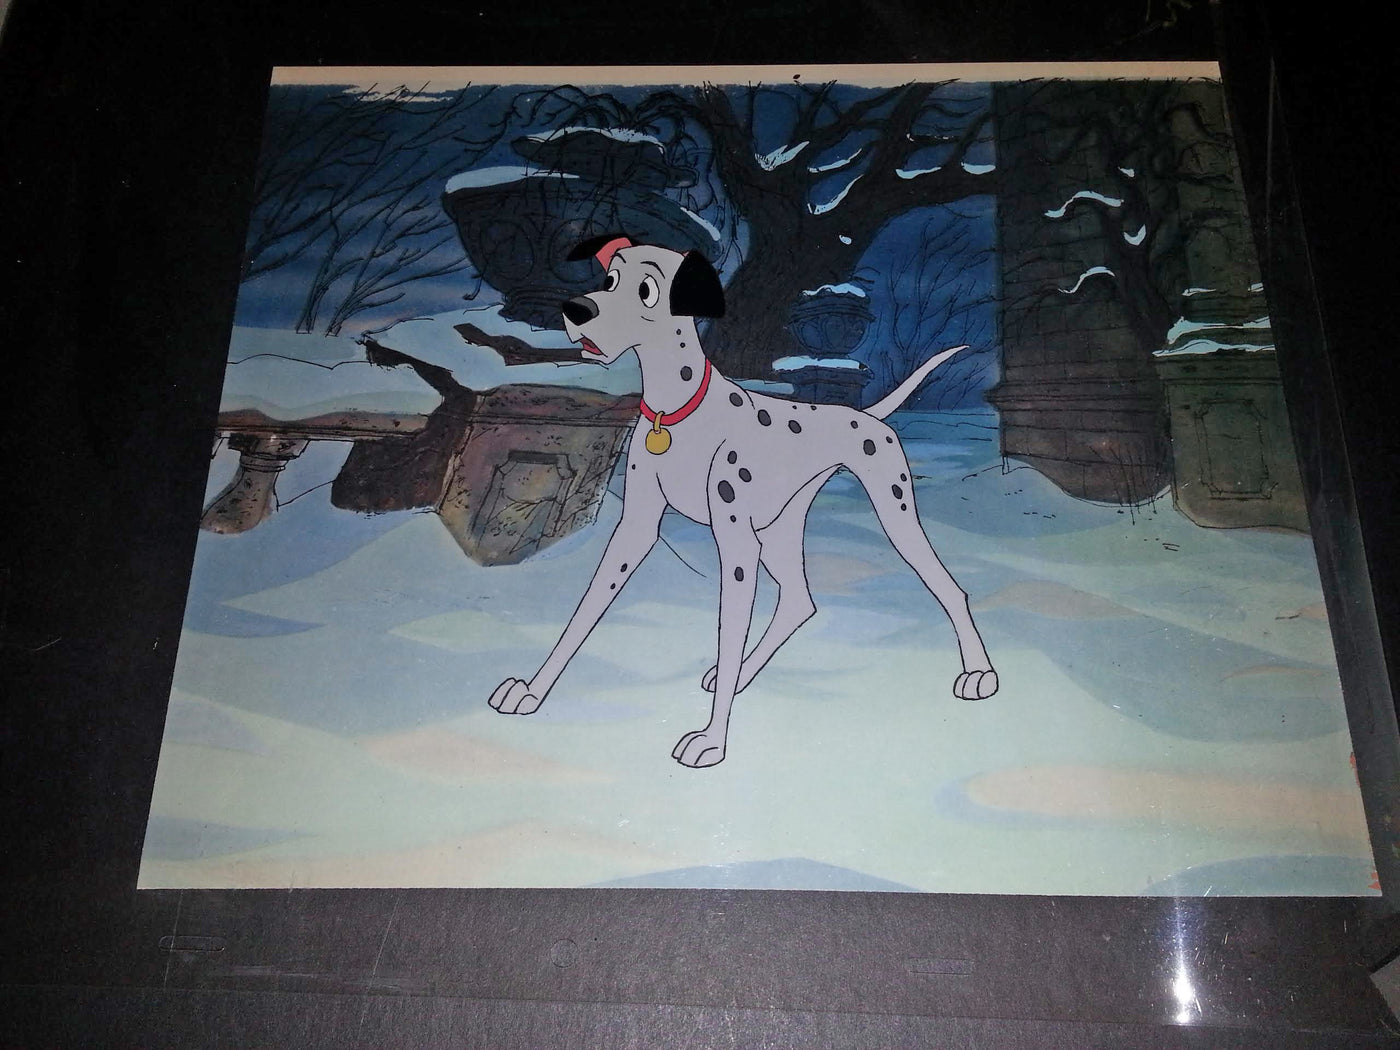 Original Walt Disney Production Cel from 101 Dalmatians featuring Pongo